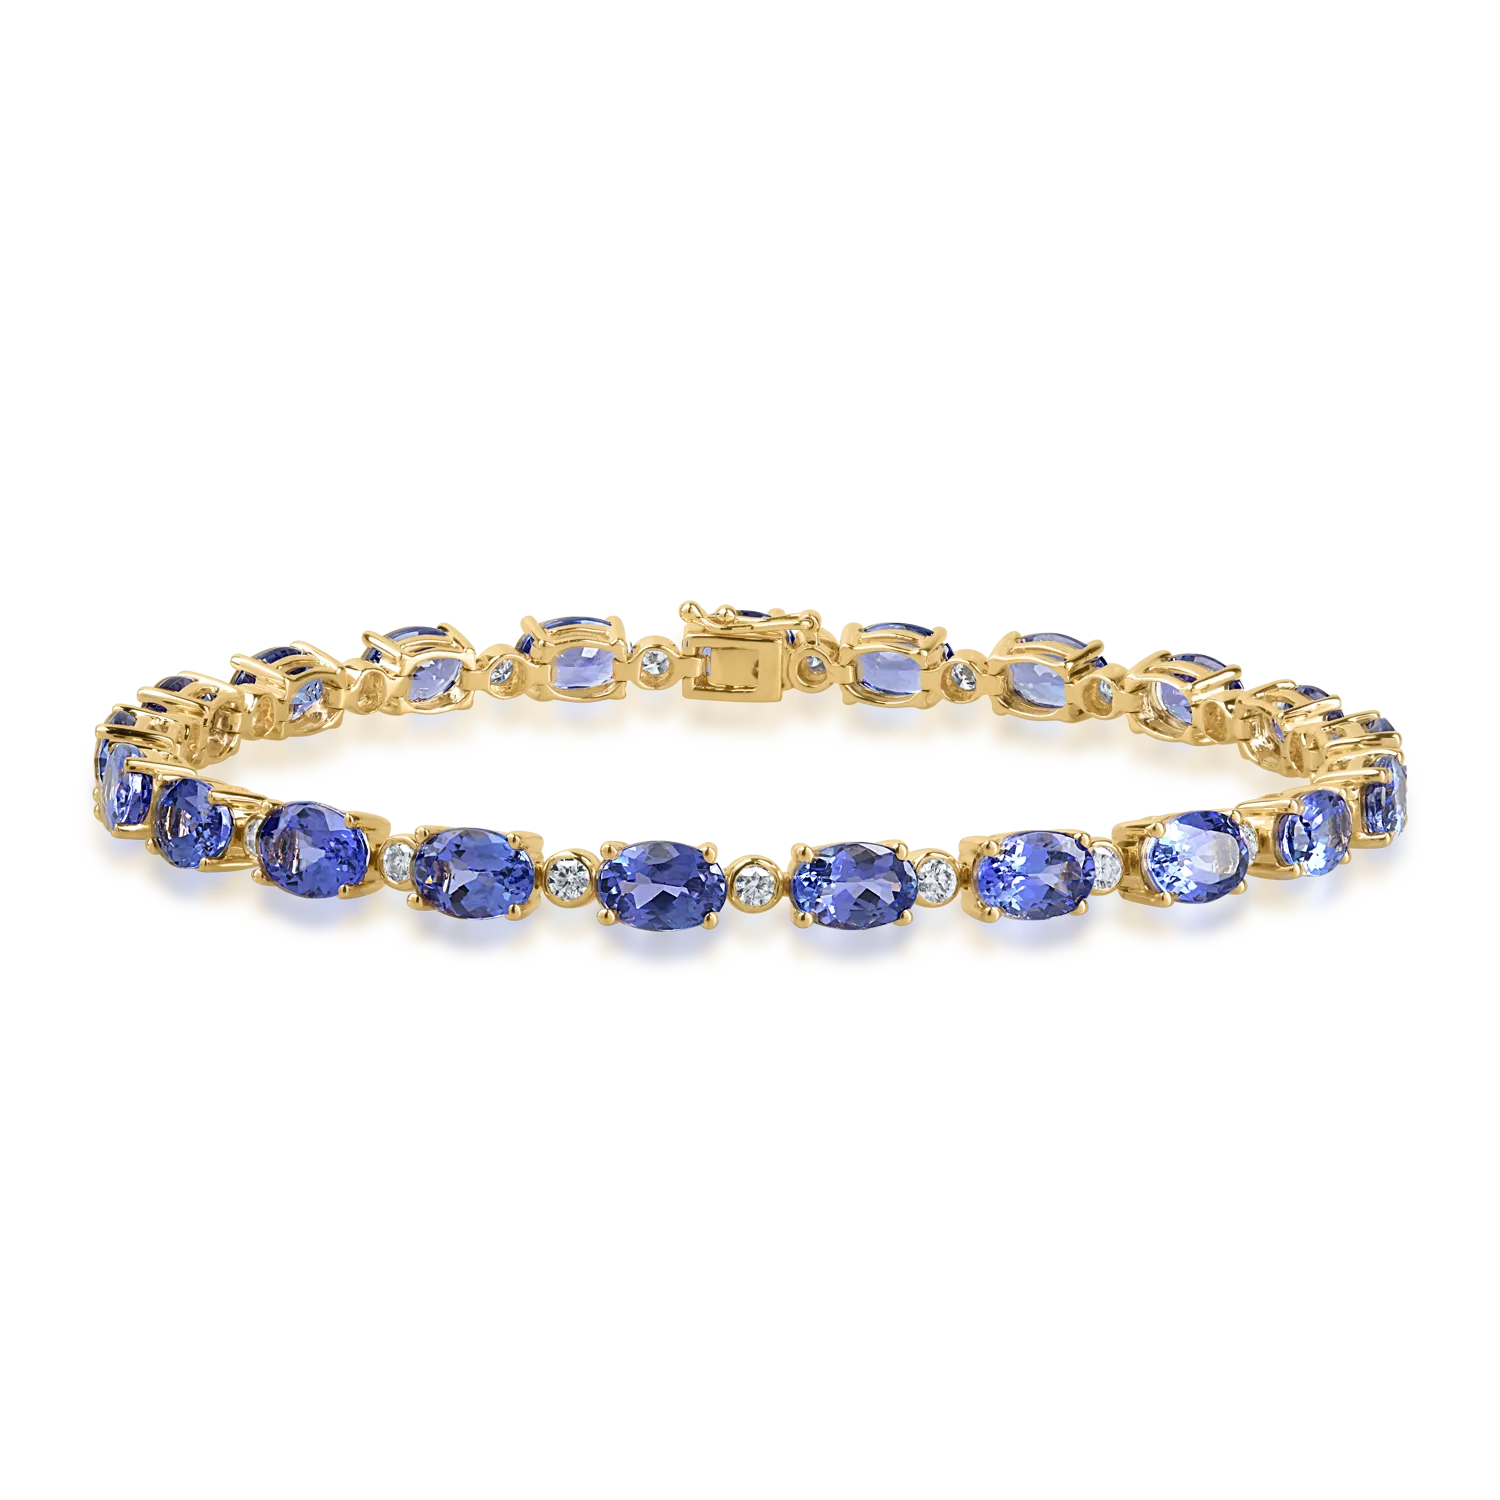 Yellow gold tennis bracelet with 13.05ct tanzanite and 0.85ct diamonds